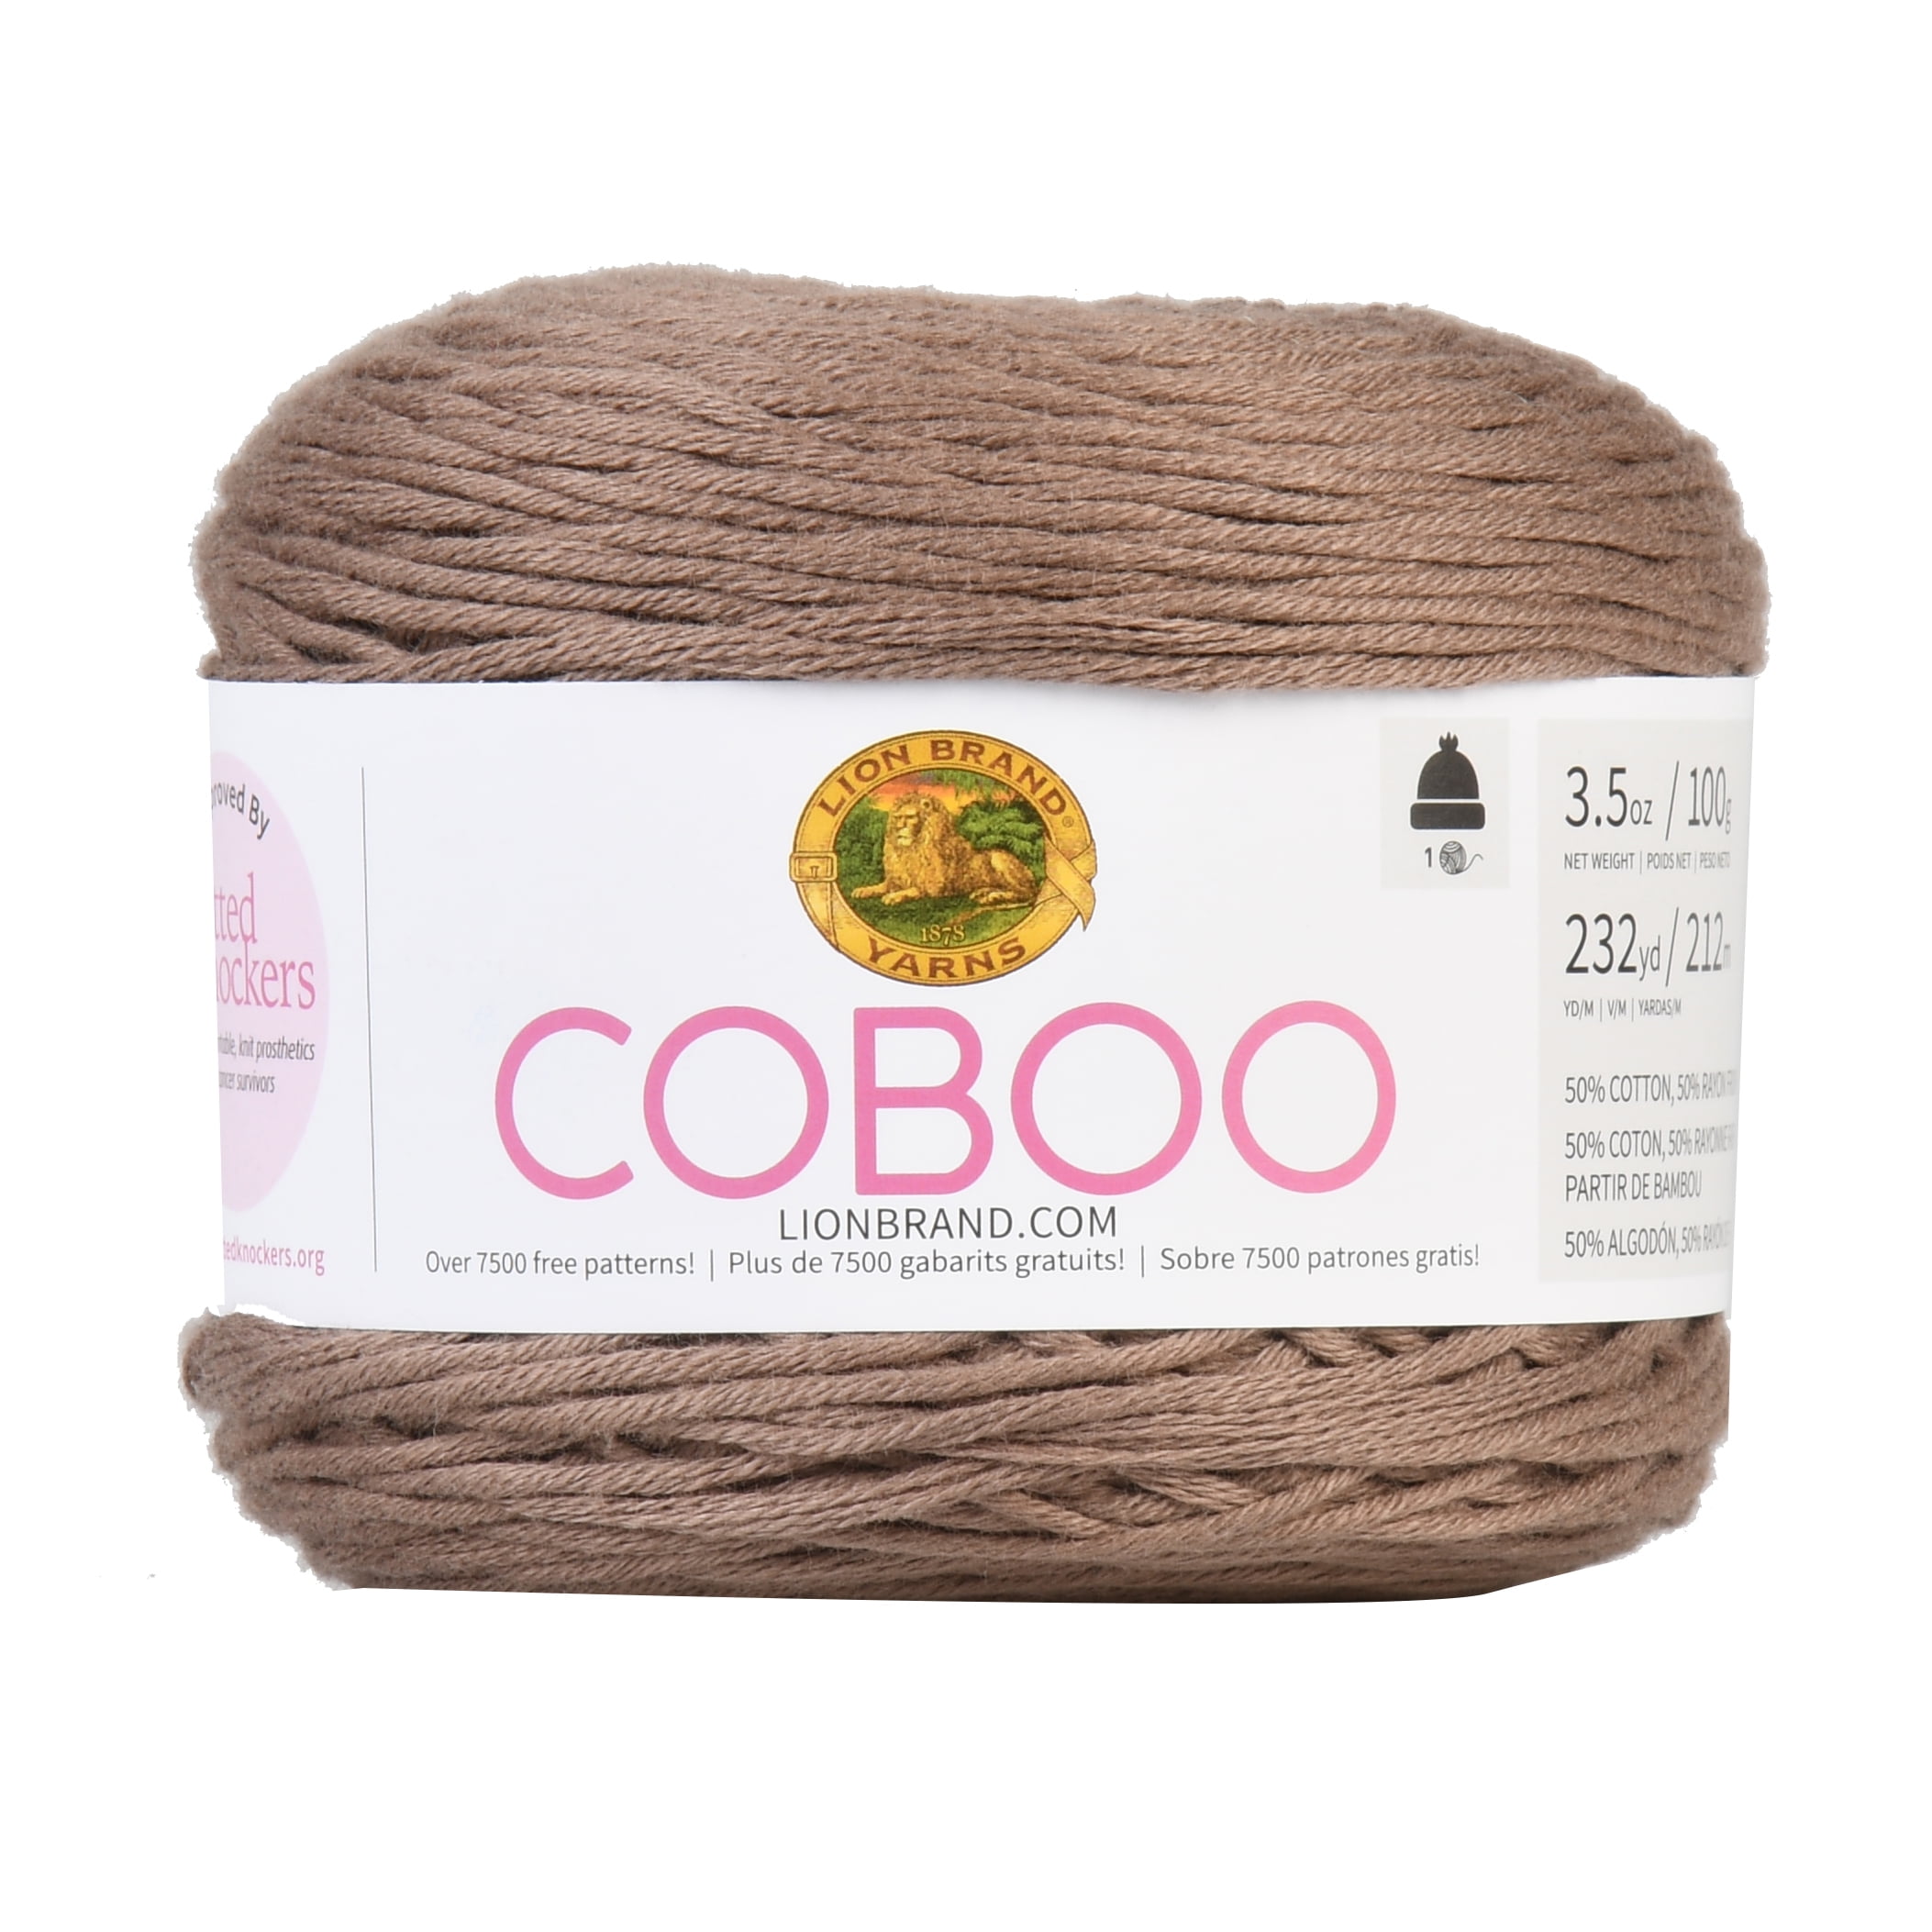 Lion Brand Coboo Natural Fiber Yarn 3pk by Lion Brand